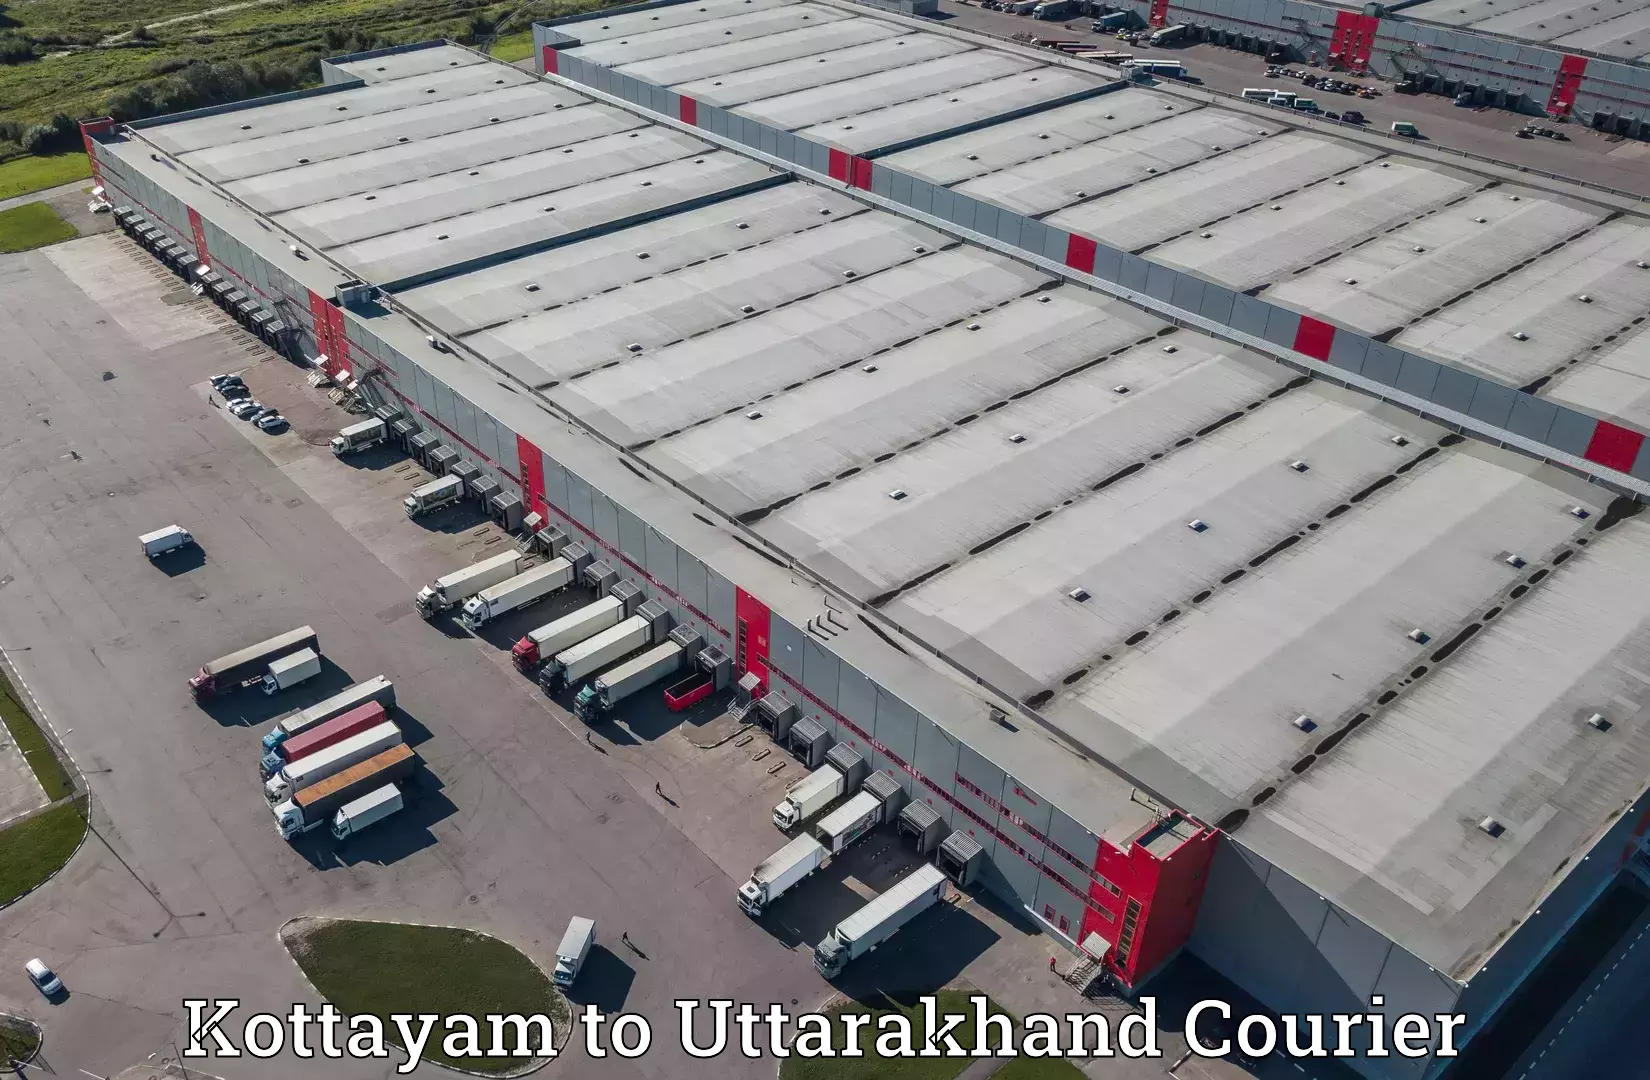 Courier service booking Kottayam to Uttarakhand